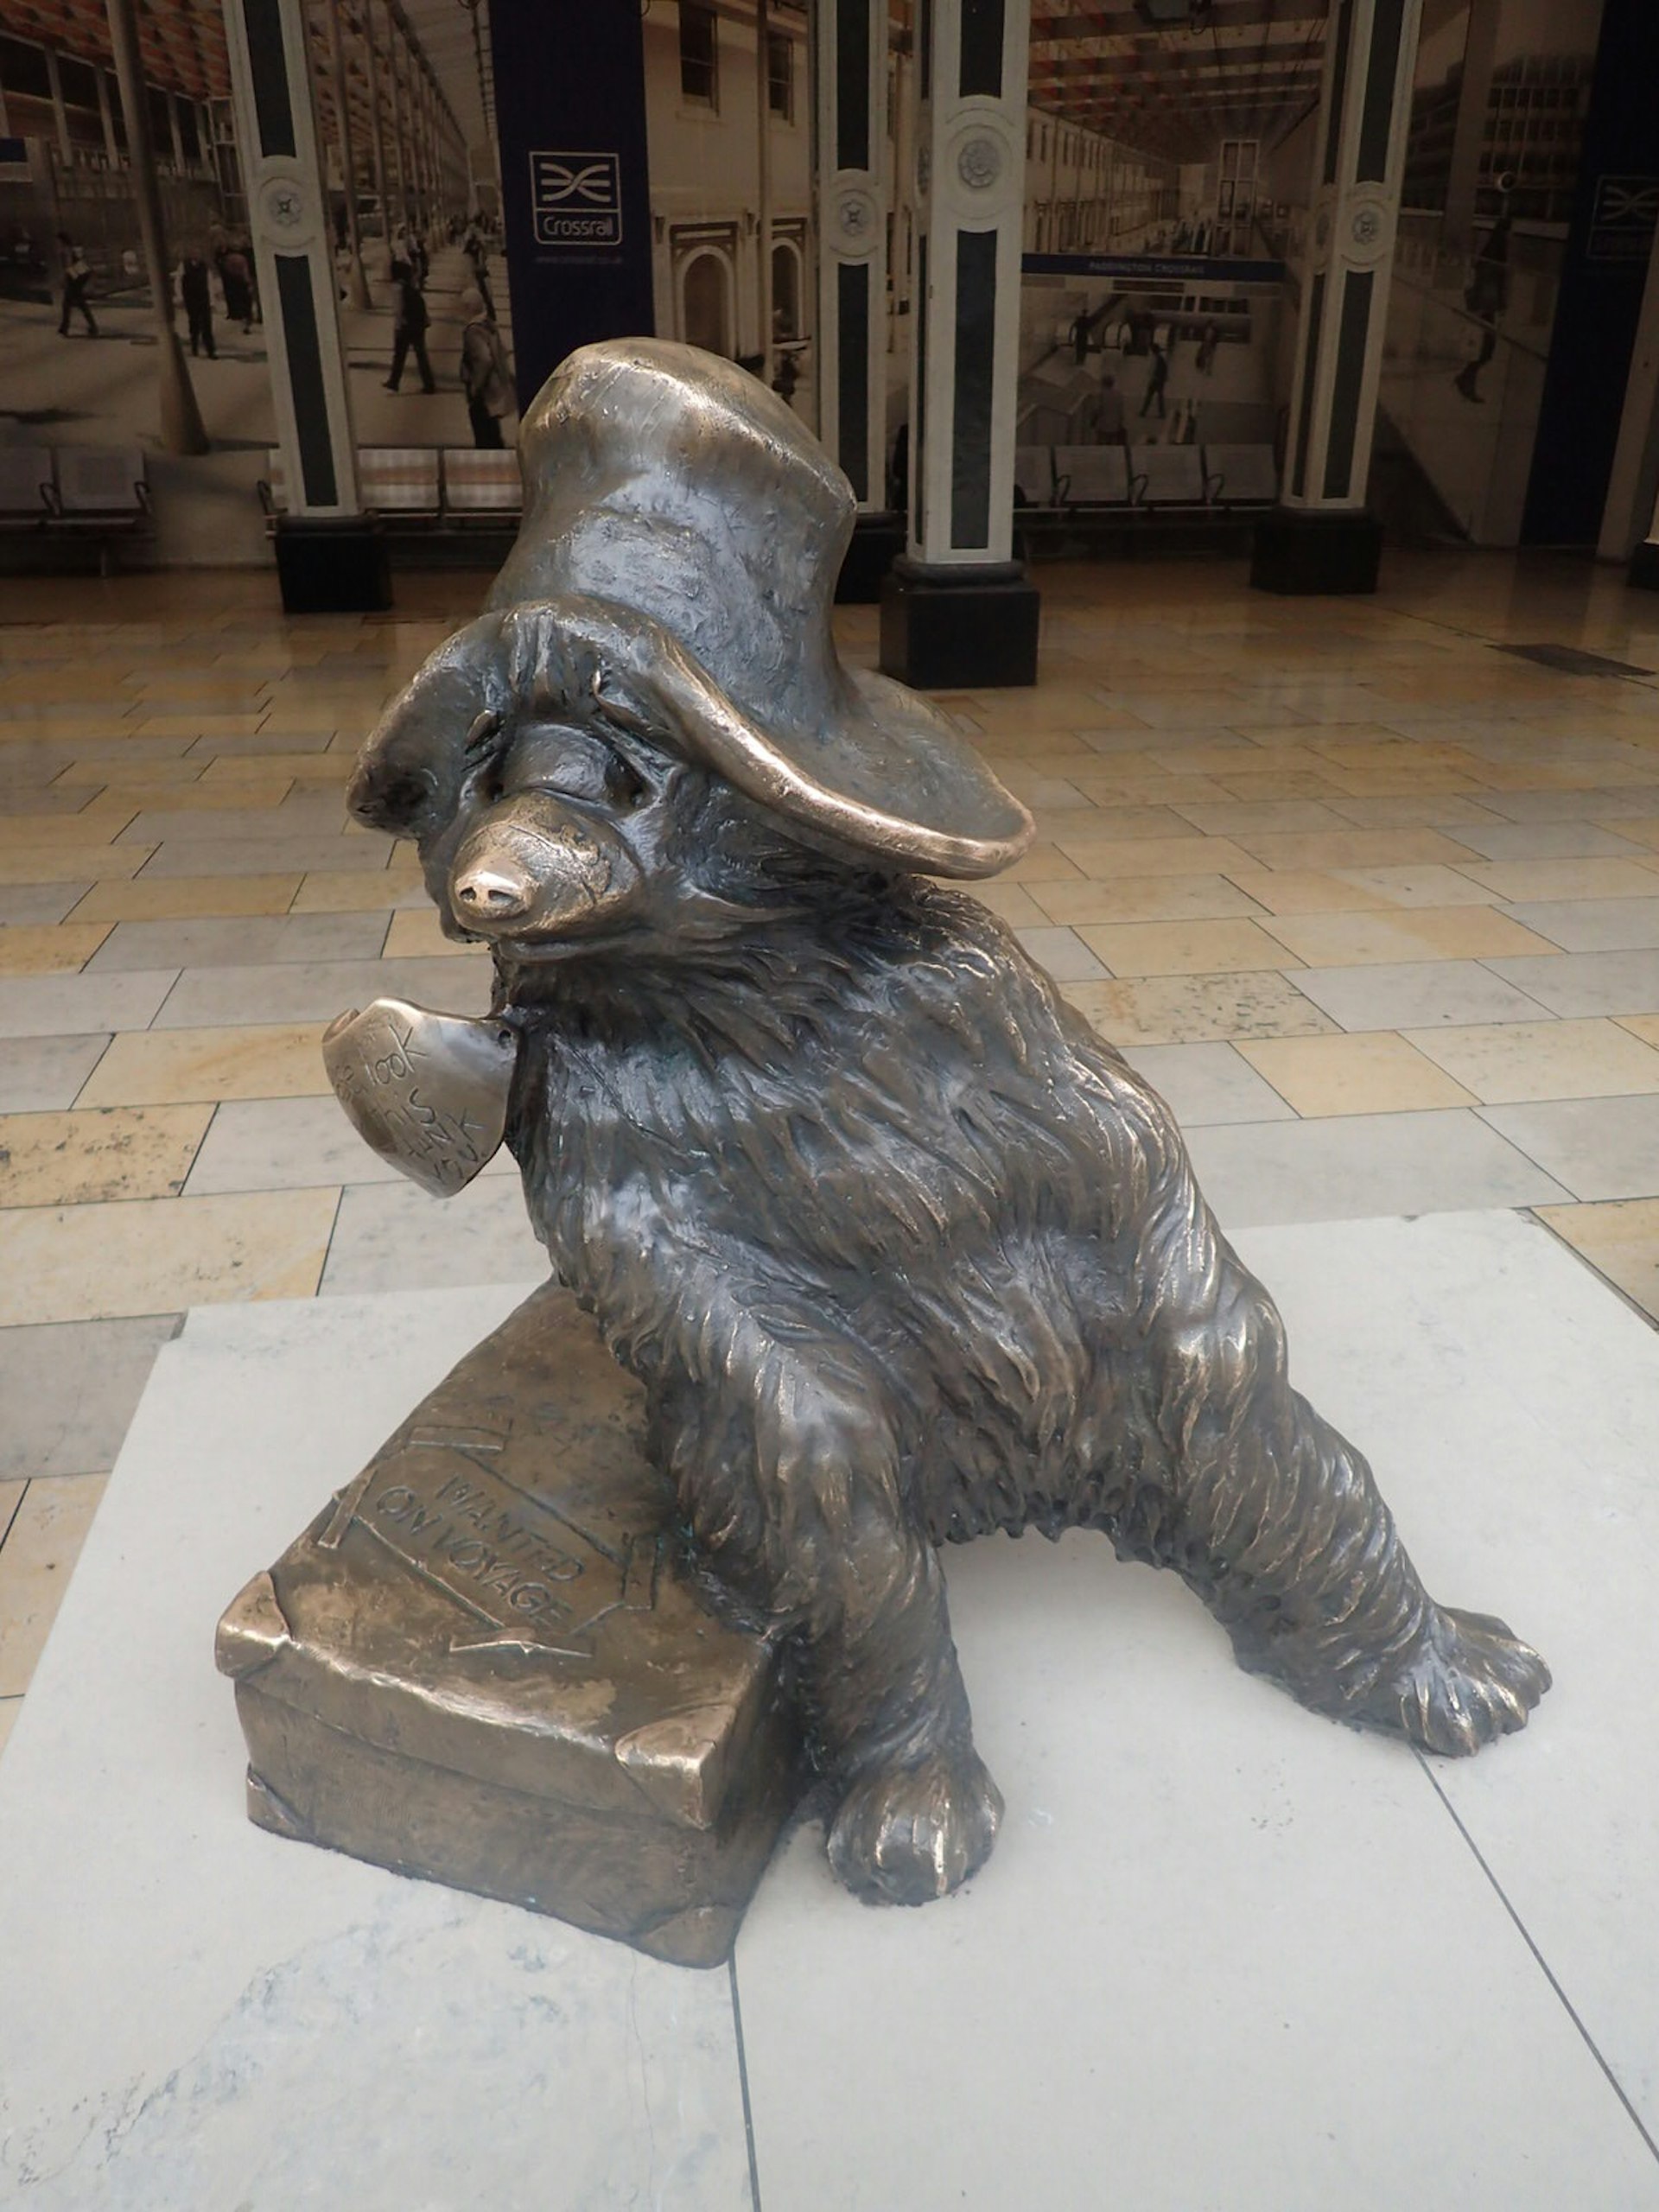 Paddington Bear sculpture in Paddington Station, London